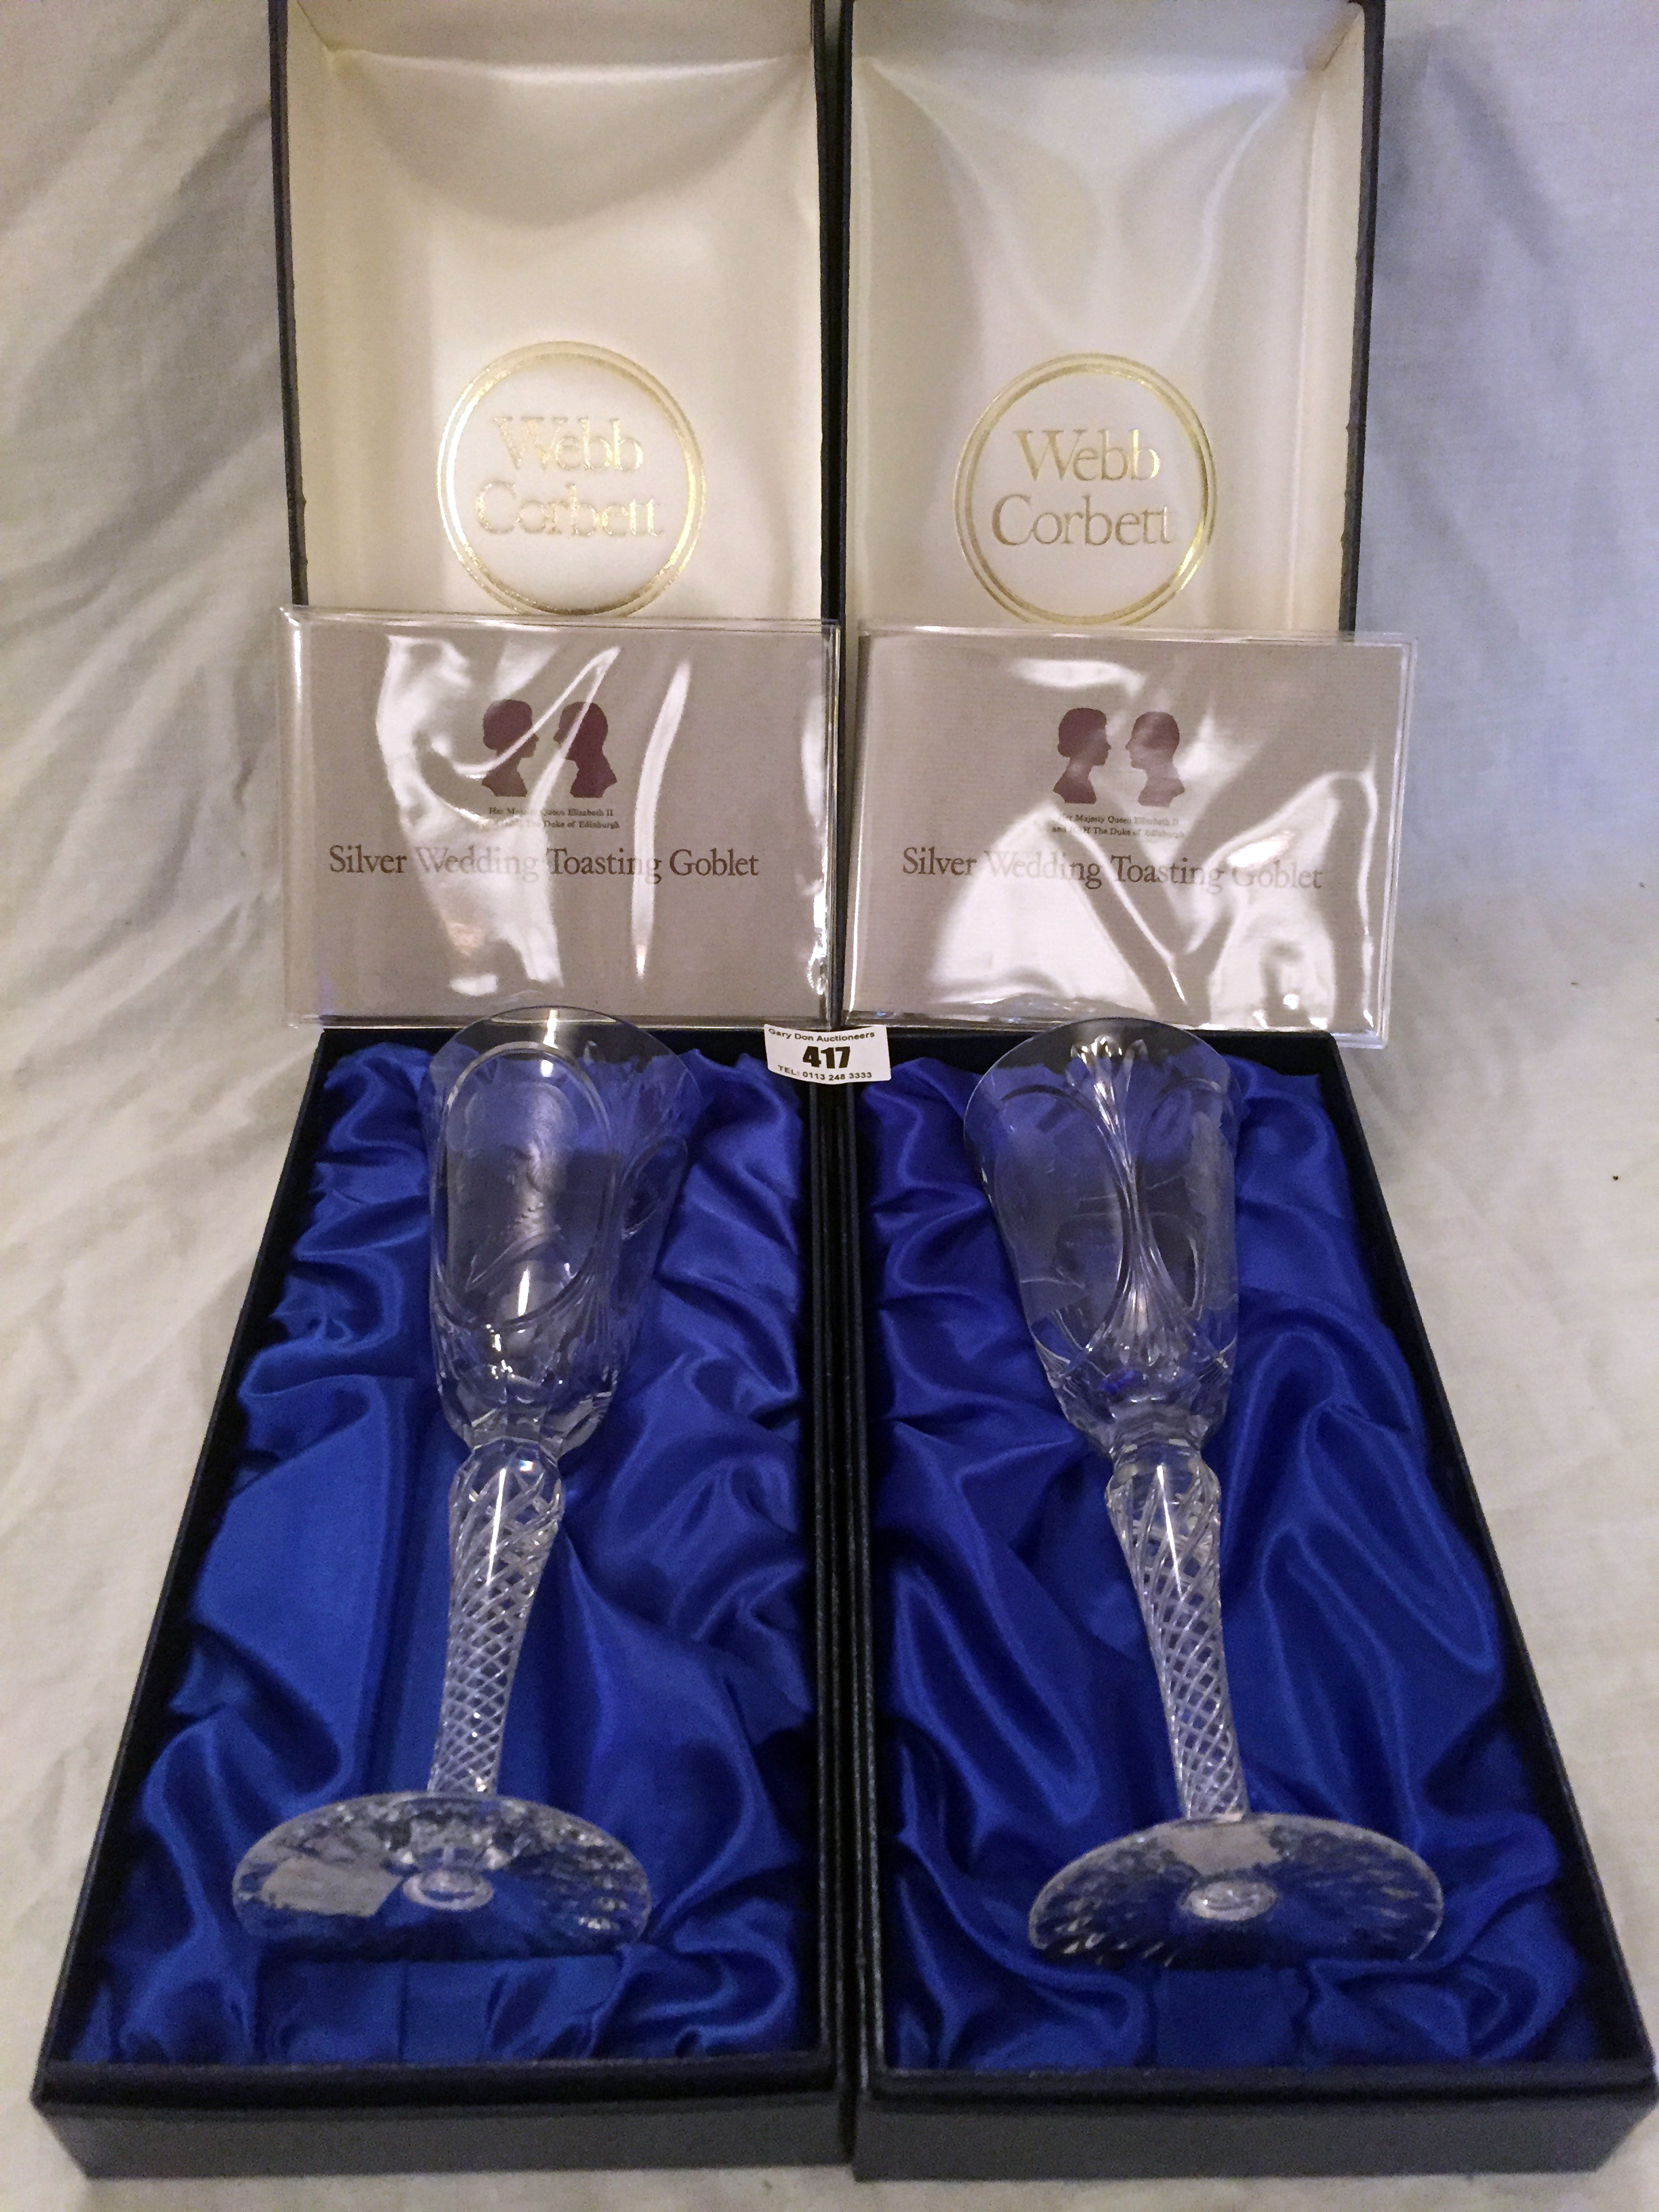 Webb Corbett pair of Silver Wedding toasting goblets (boxed)